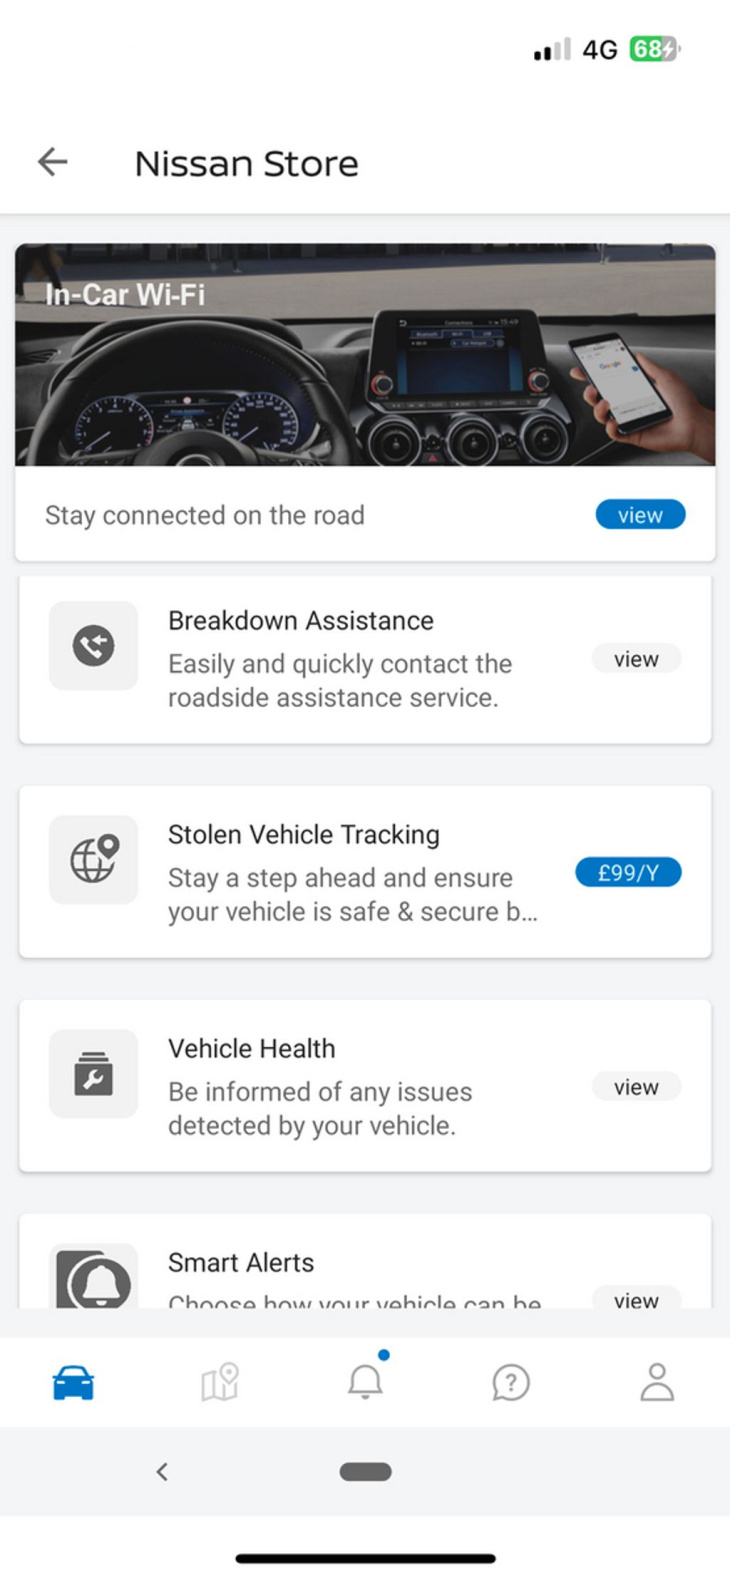 stolen-vehicle-tracking